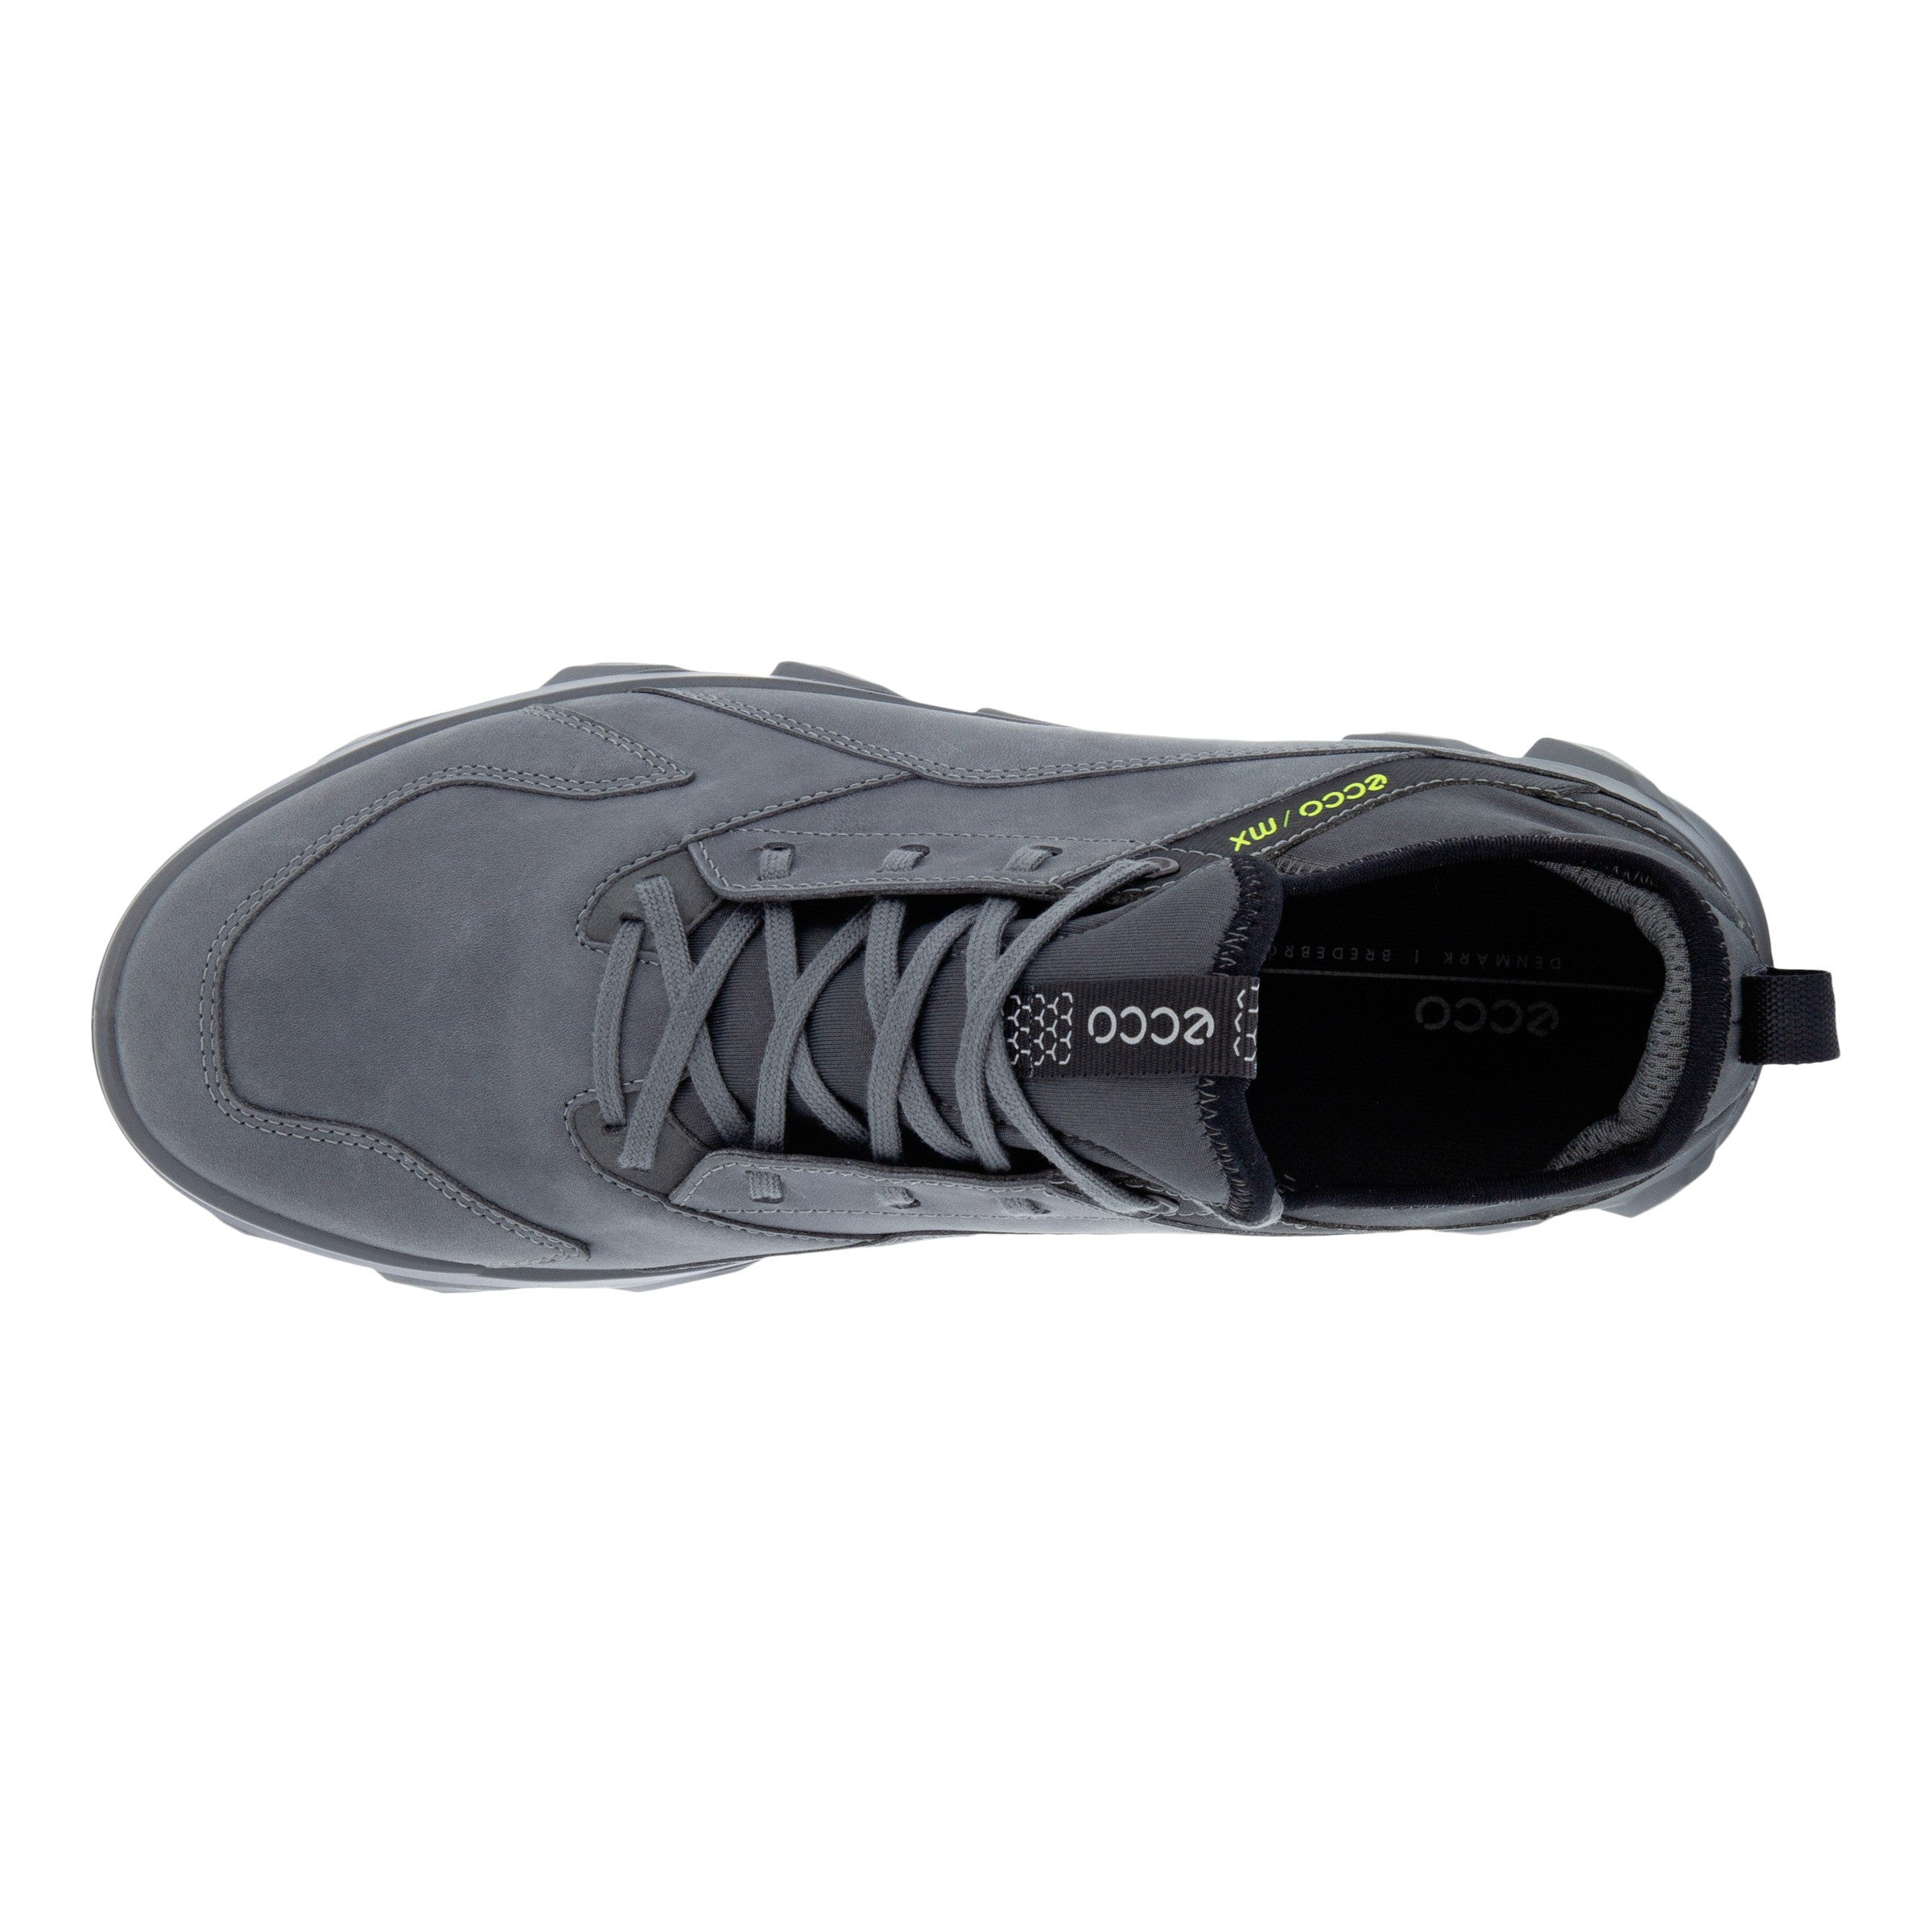 MX M Low 820184 - shoe&amp;me - Ecco - Sneaker - Mens, Shoes, Sneaker